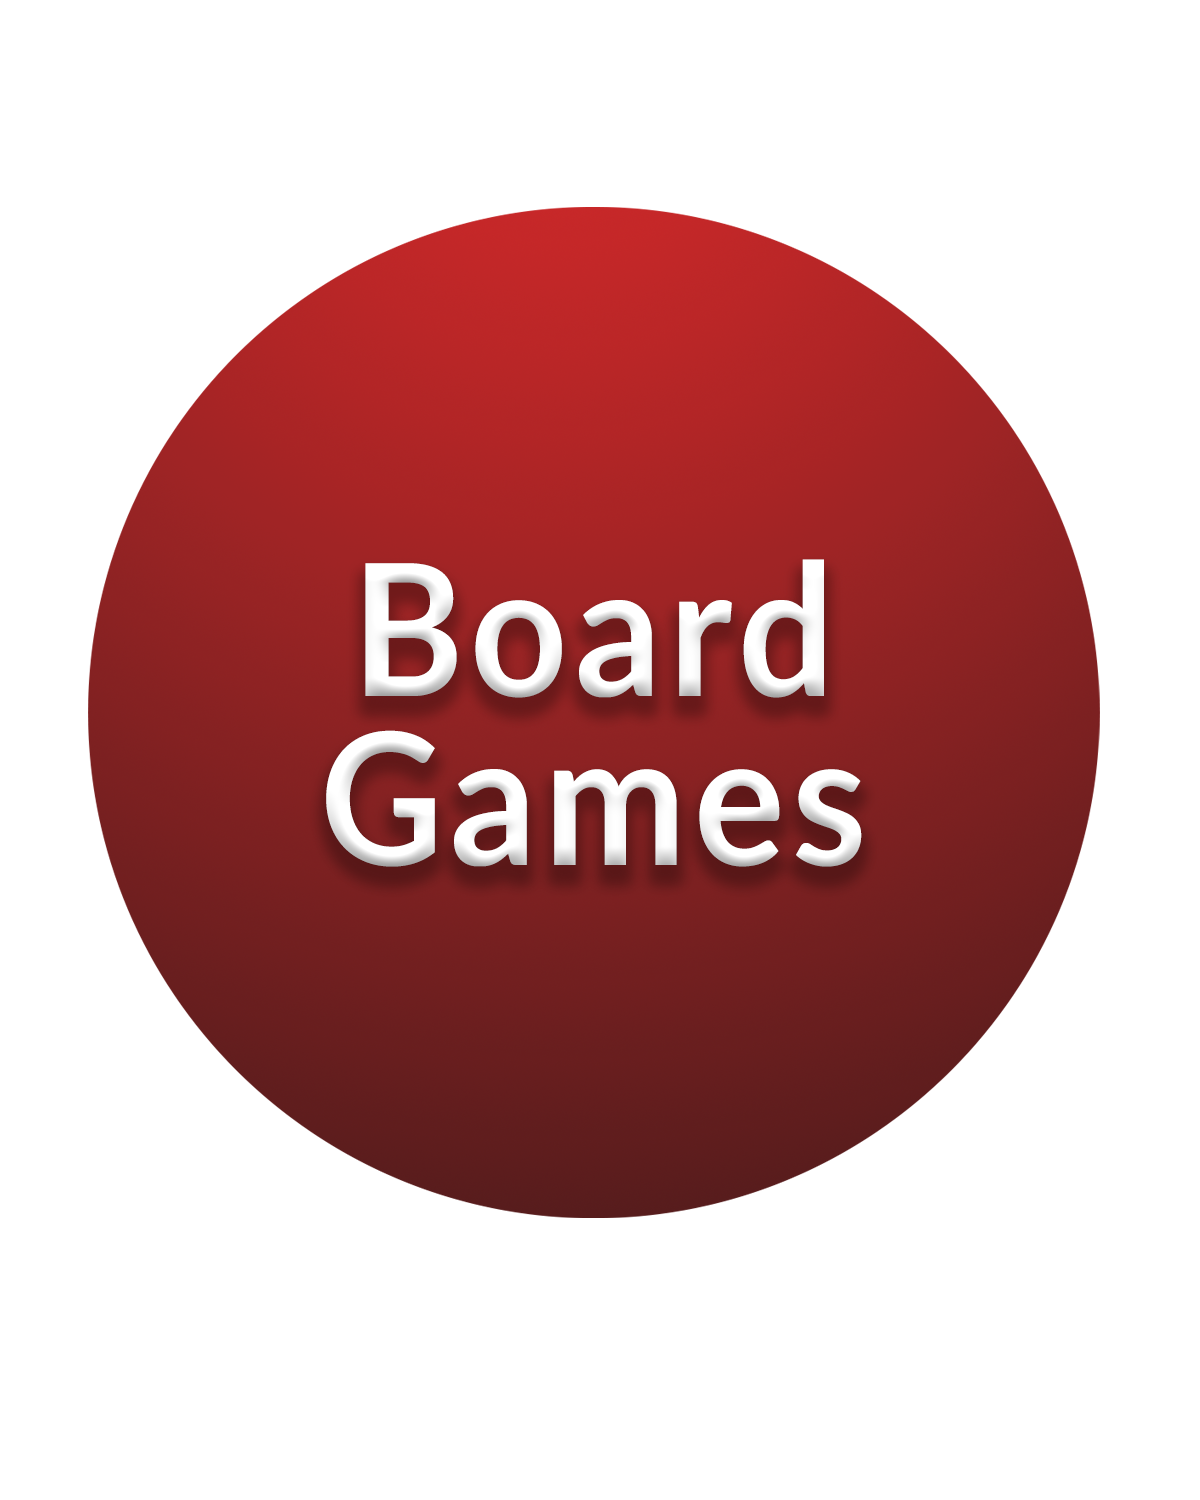 https://cdn.shopify.com/s/files/1/0011/8367/8476/files/Adittional_Board_Games.png?v=1666703771
